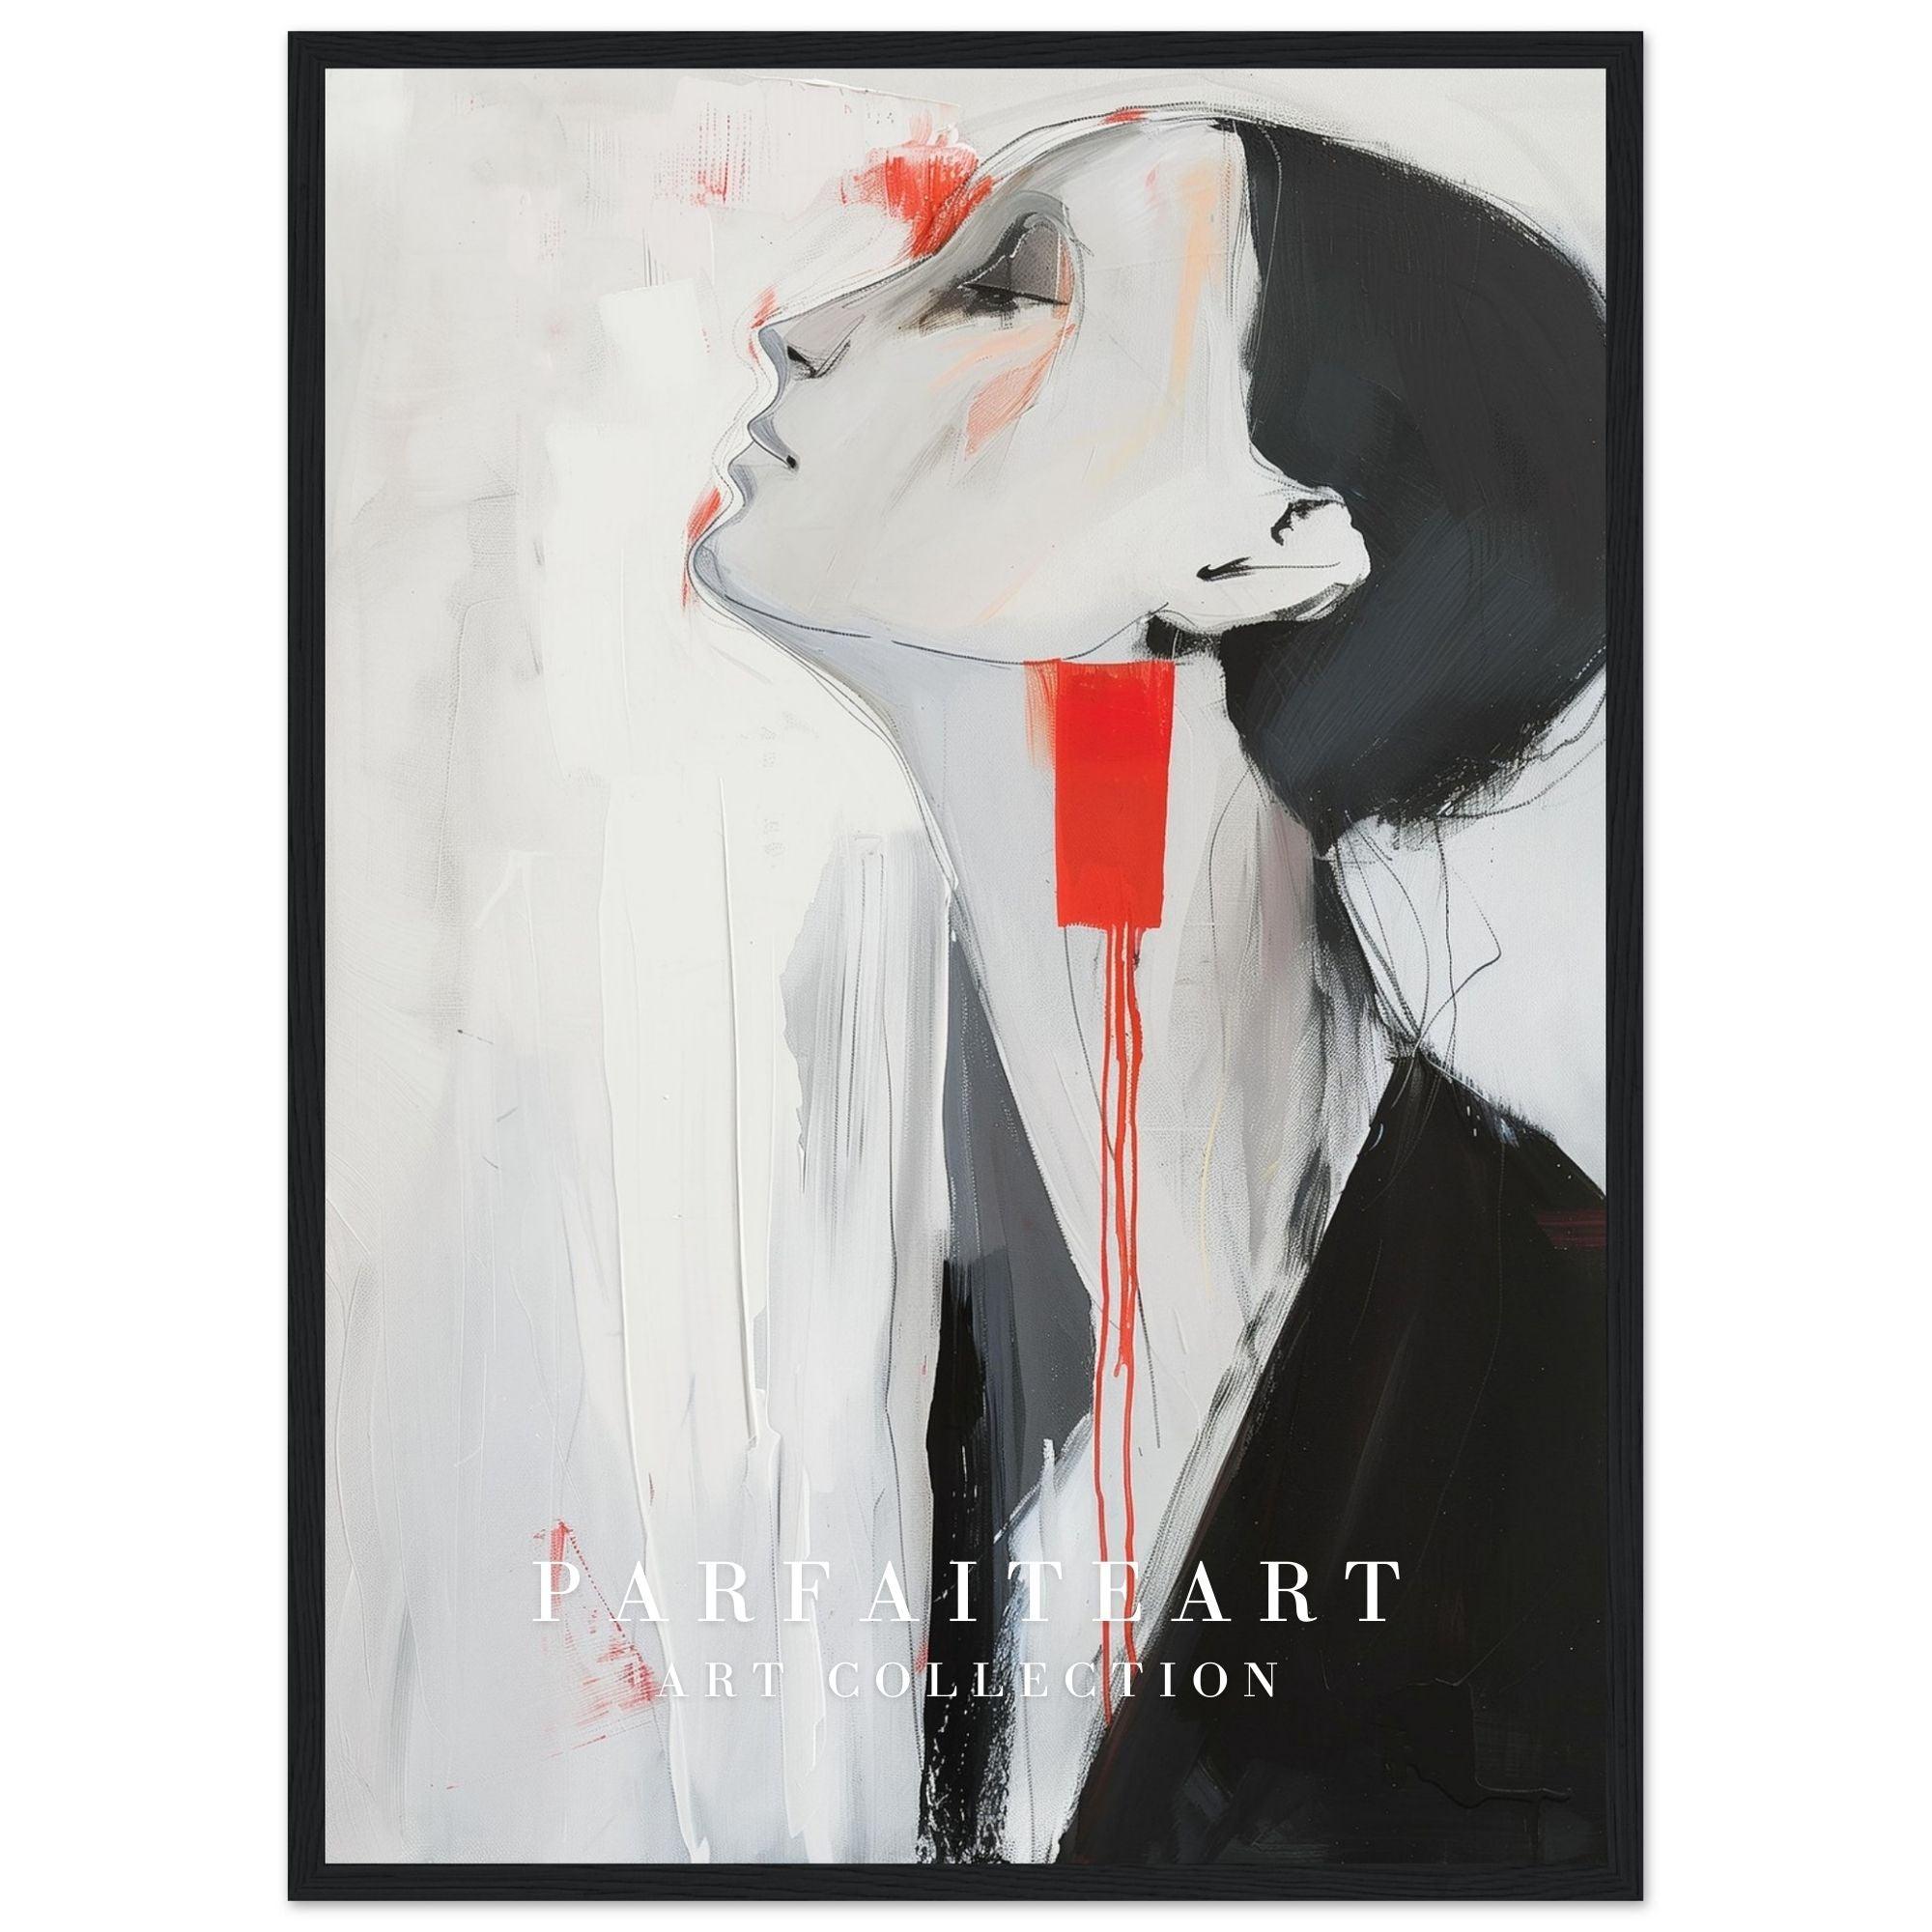 Minimalism Art,Abstract,Wall Art,Poster,Lady Portrait,Framed MPF 1 - ParfaiteArt